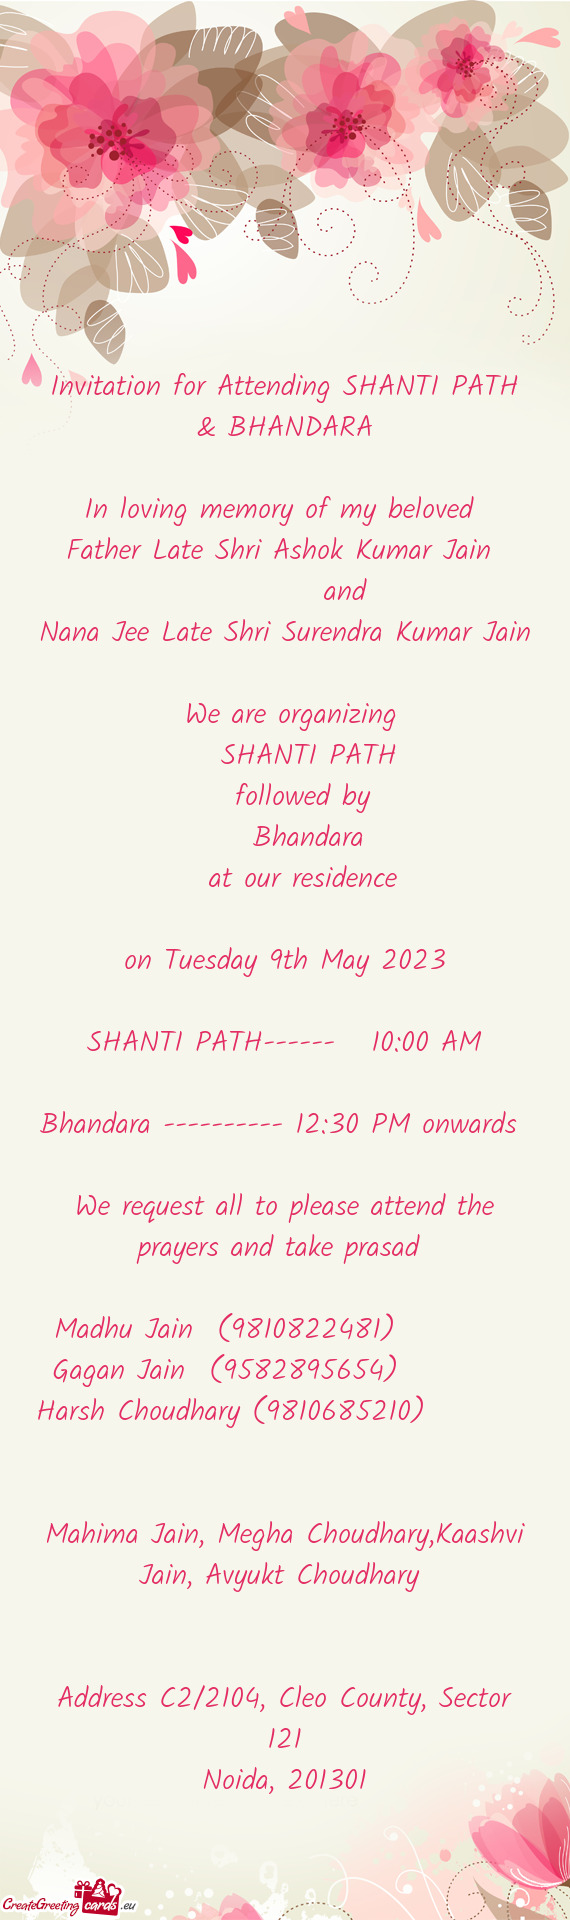 Invitation for Attending SHANTI PATH & BHANDARA